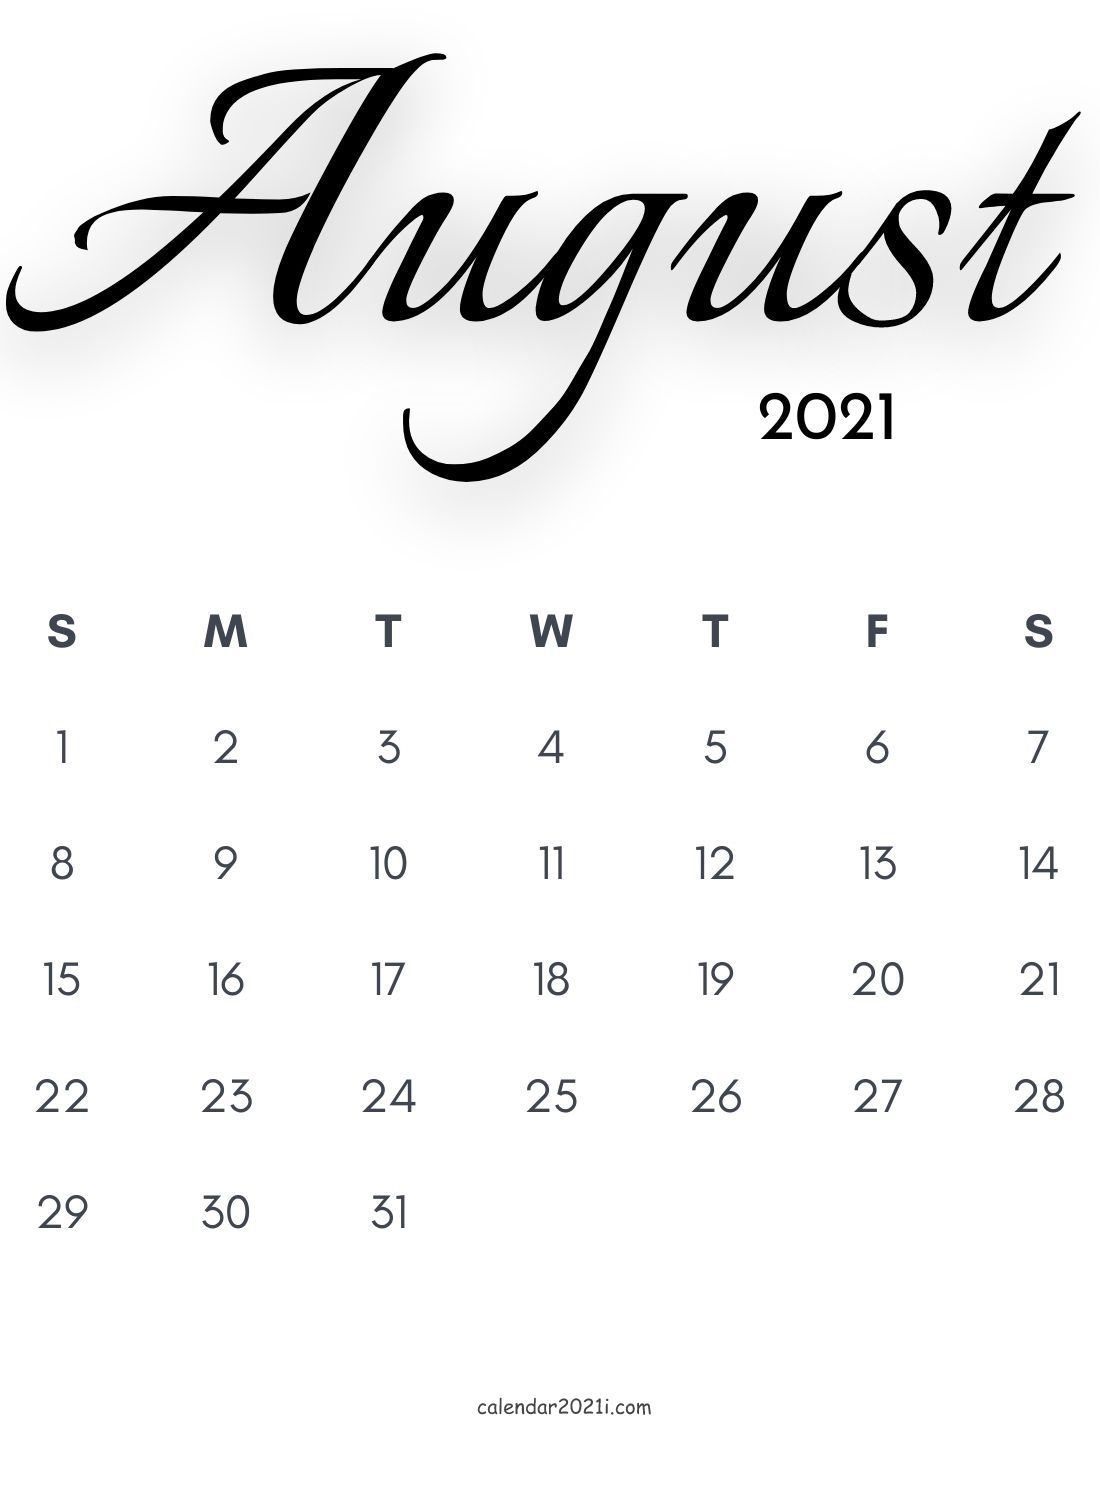 Take August 2021 Calendar